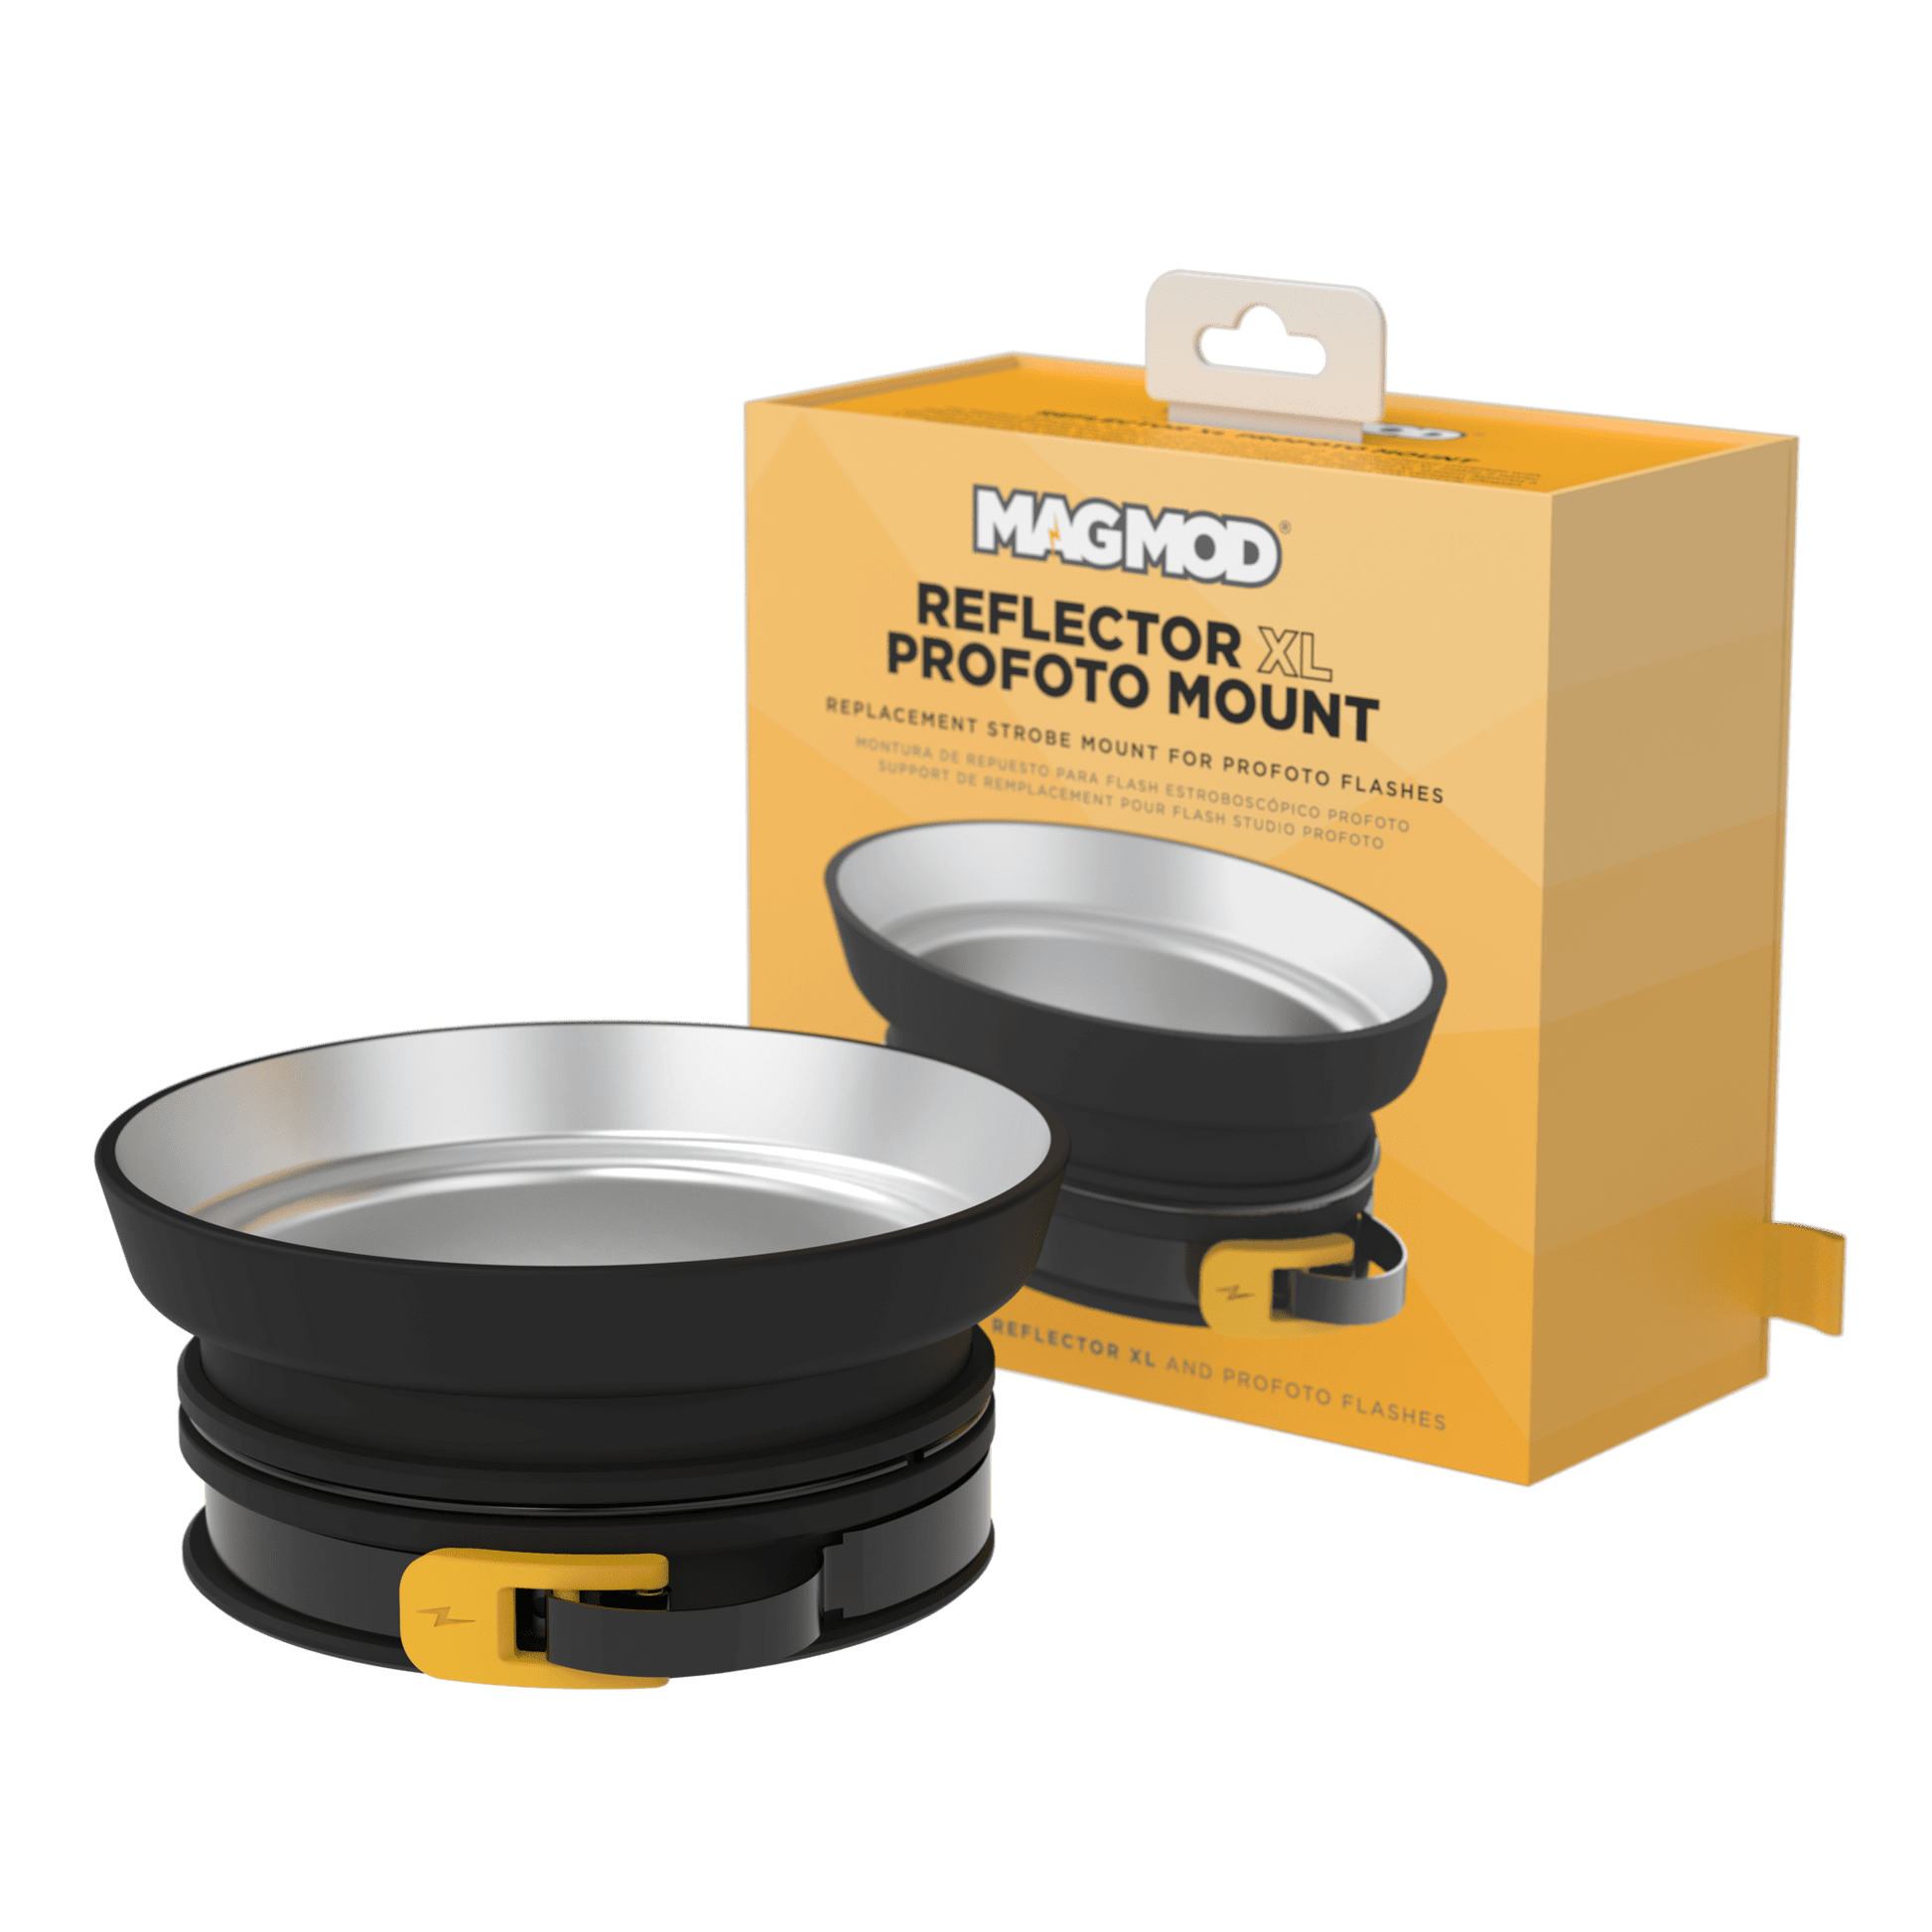 Reflector XL Profoto Mount - MagnetMod